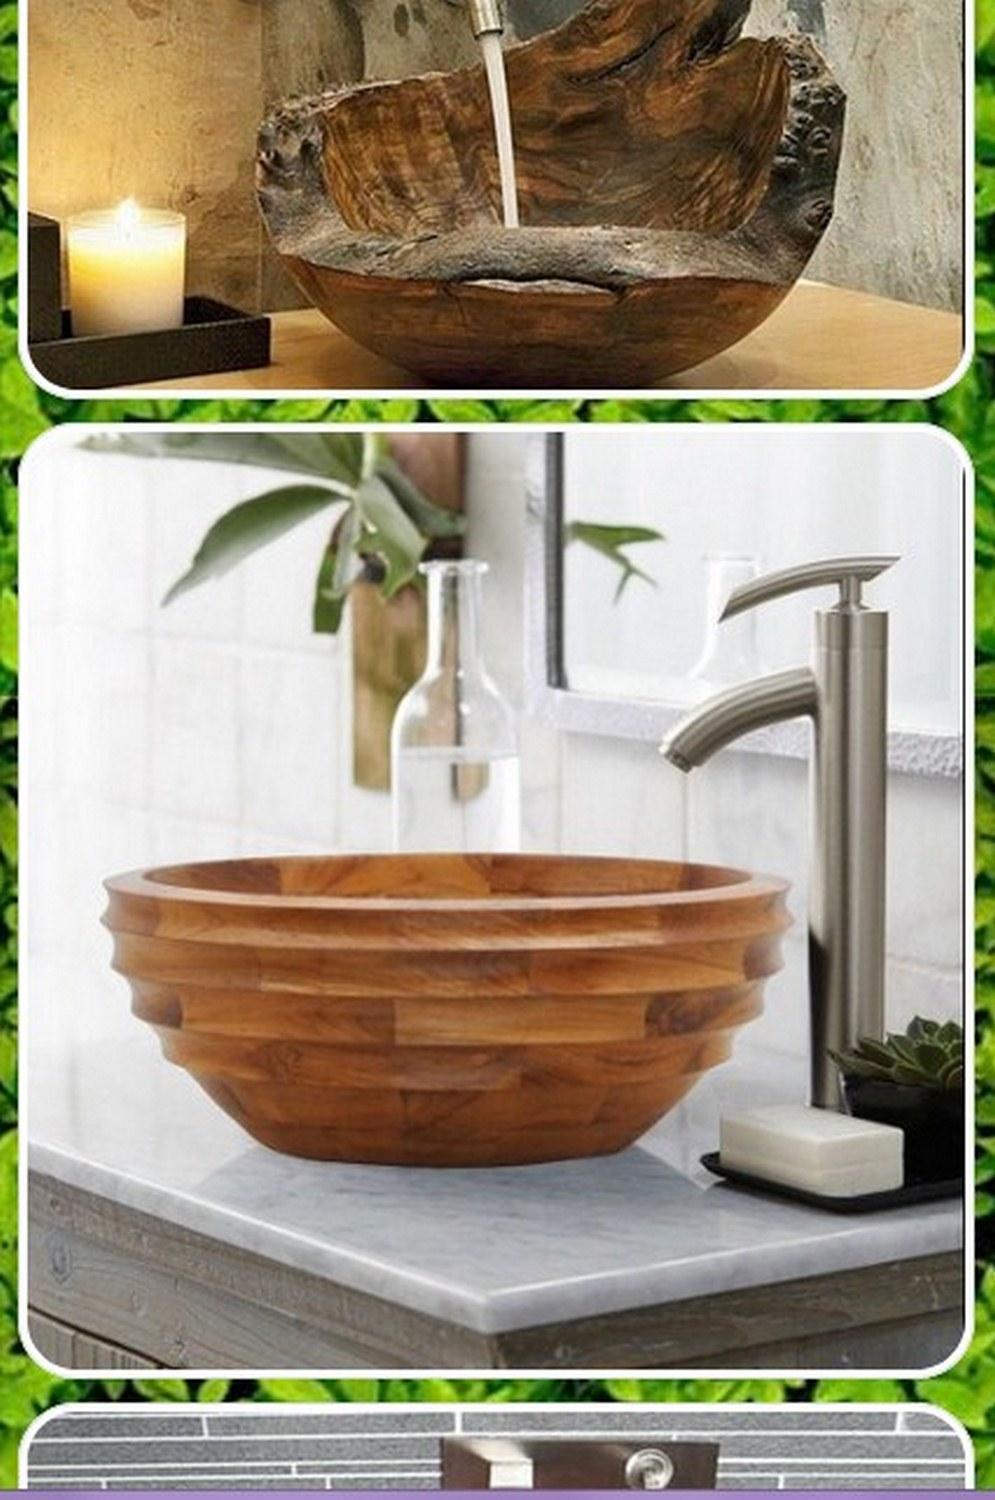 Wood Sink Design 3.0 Screenshot 11